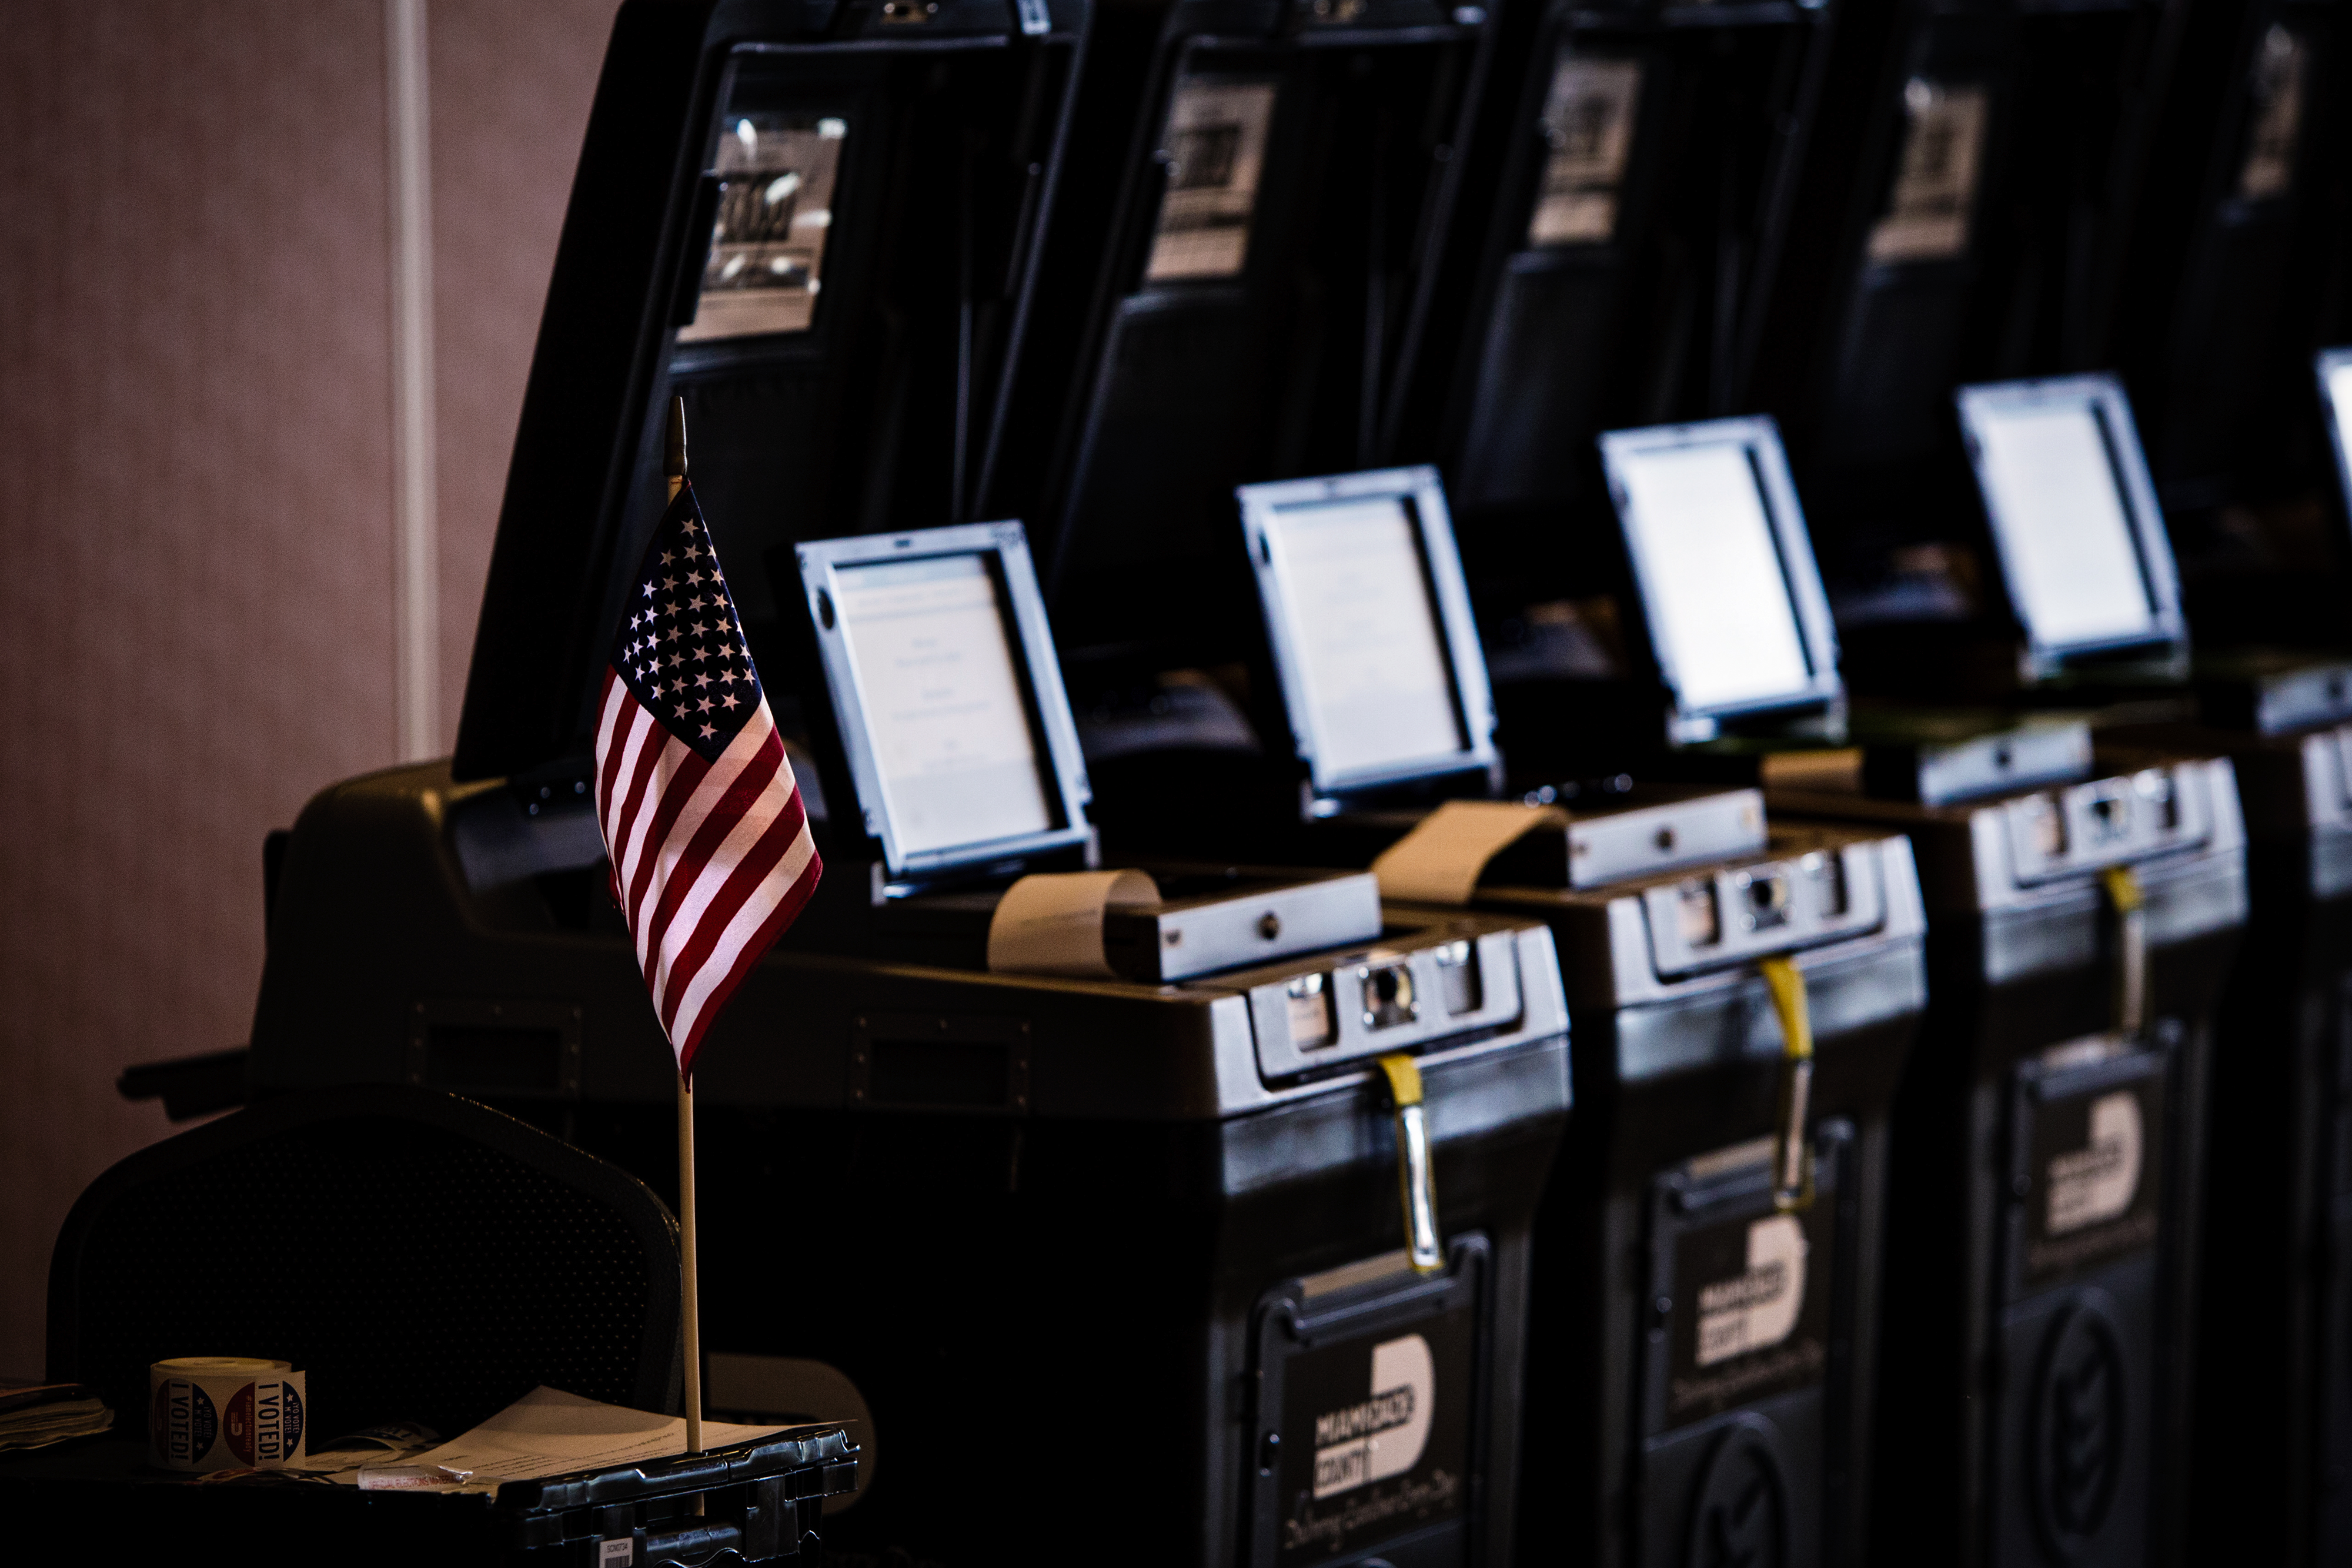 ES&S voting machines